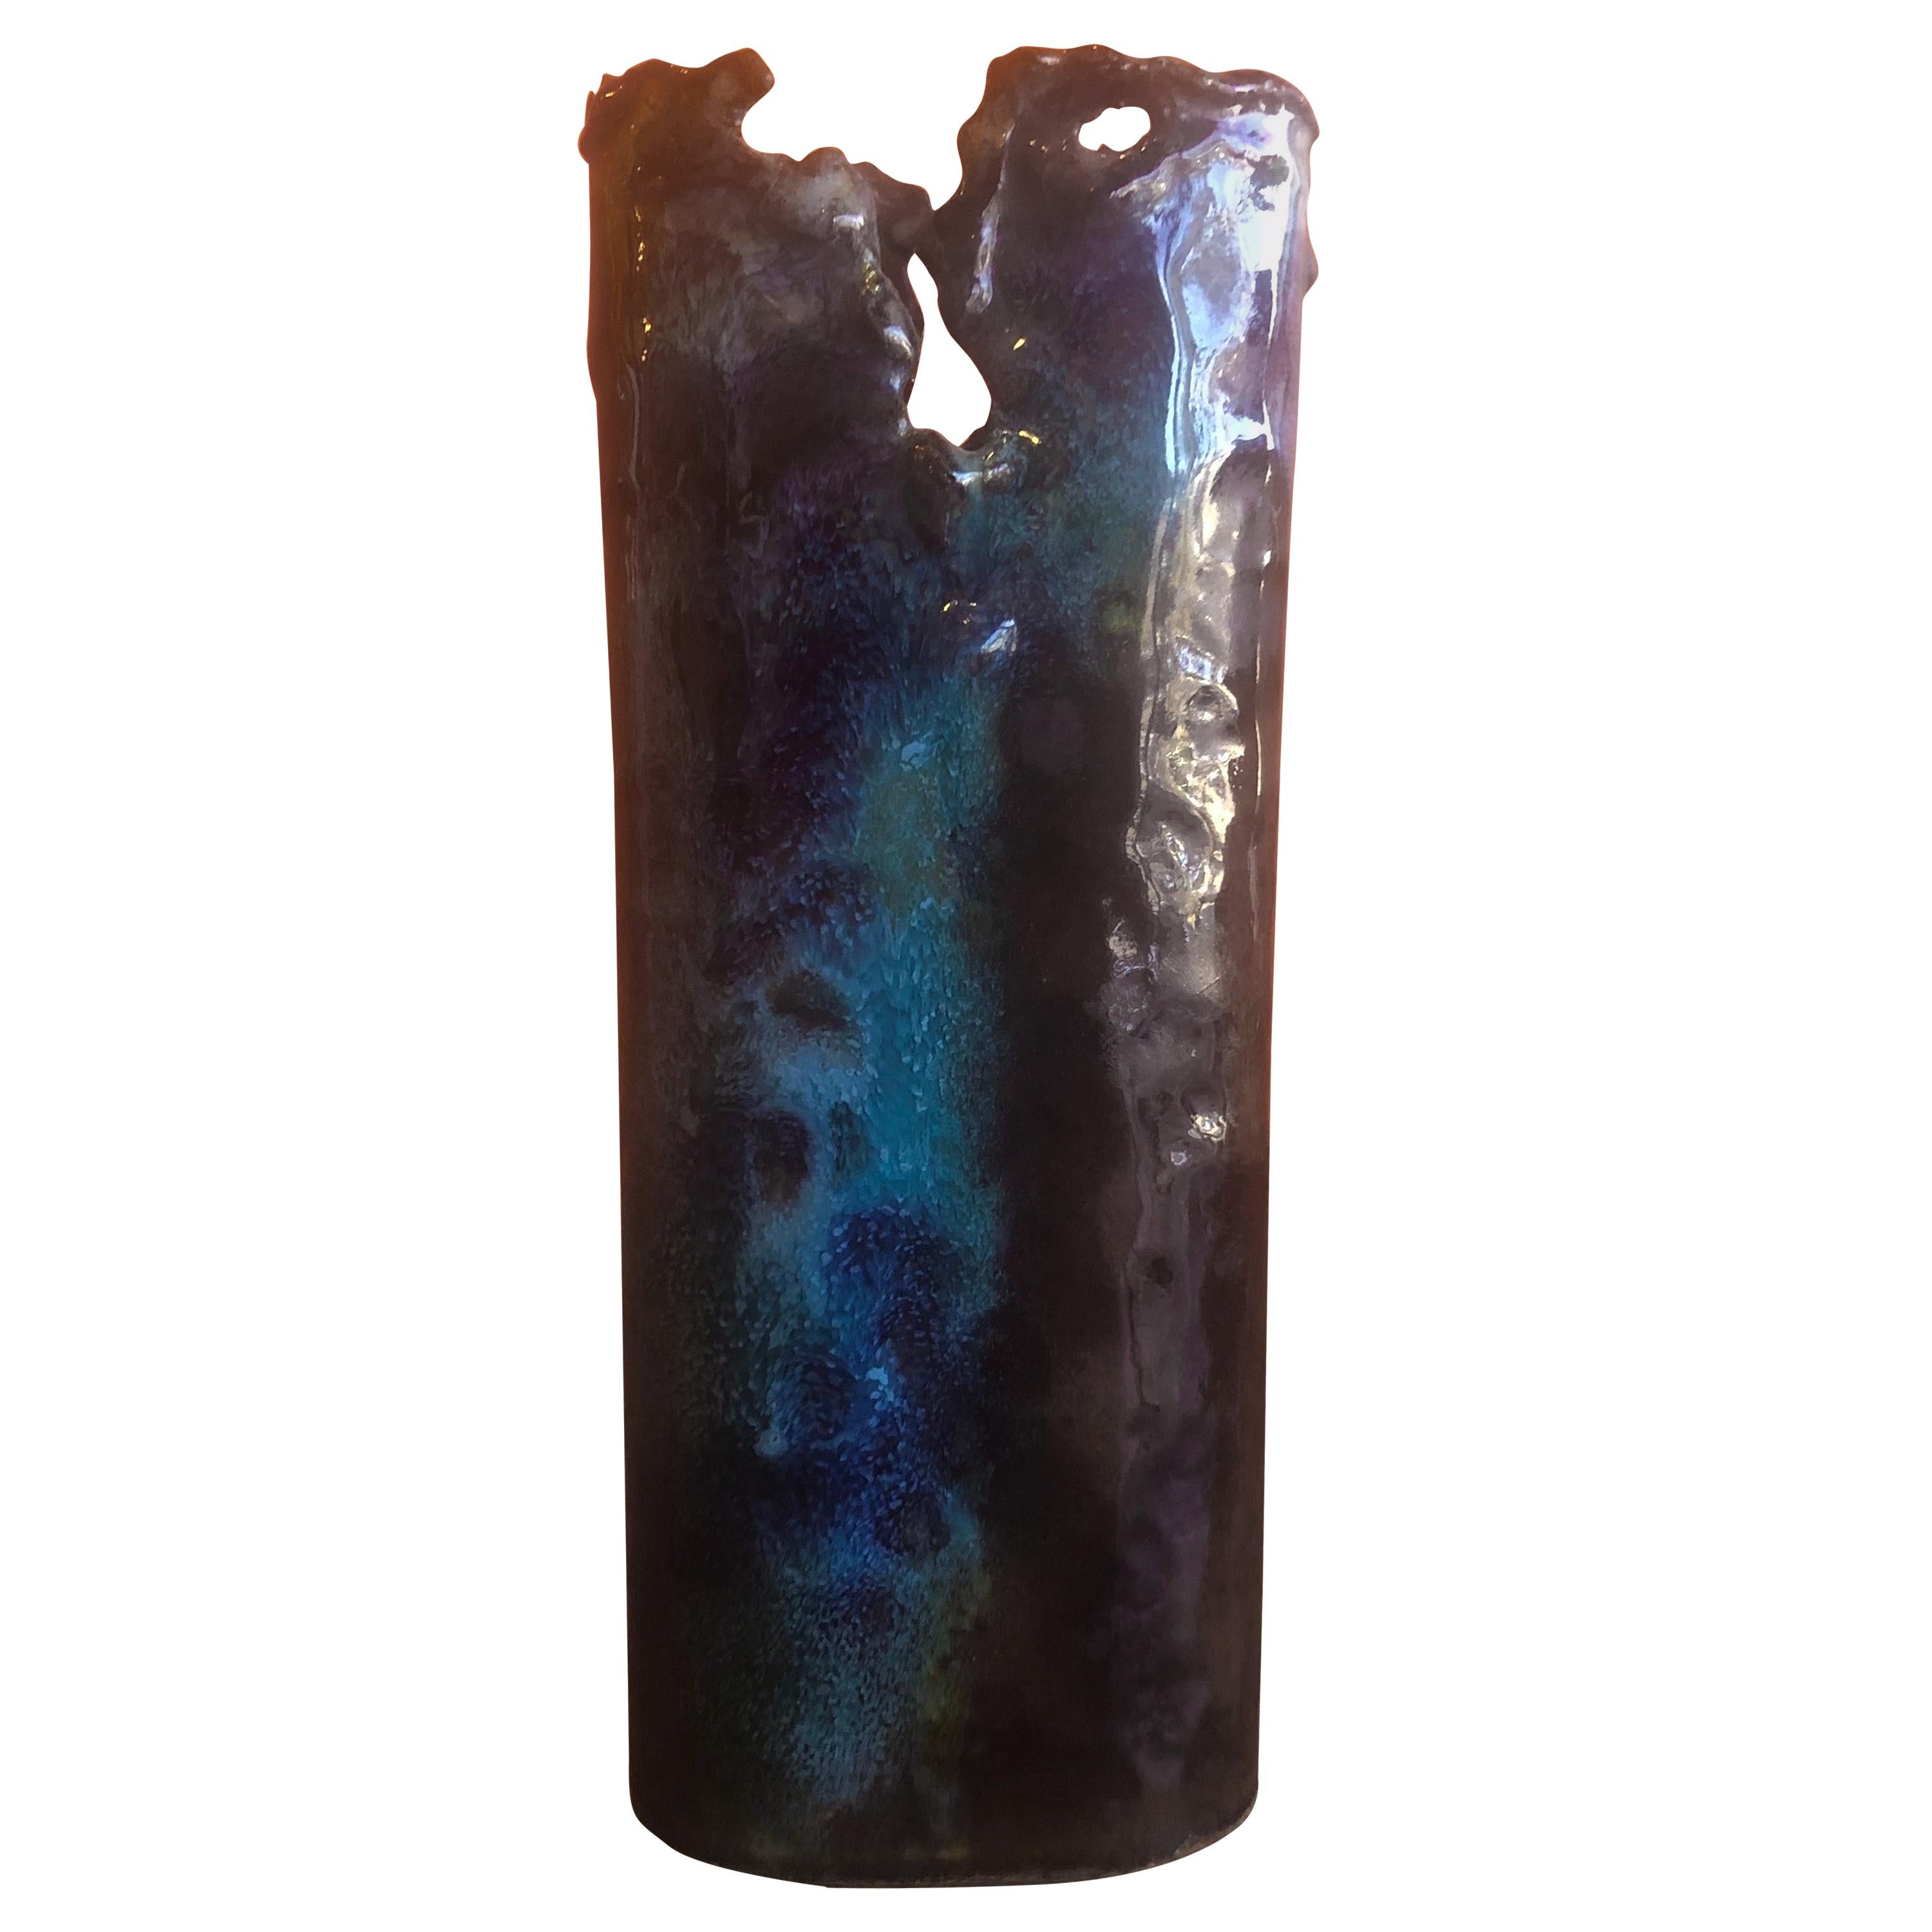 Brutalist Copper Vase with Blue & Brown Enamel Overlays by Rita Brierton